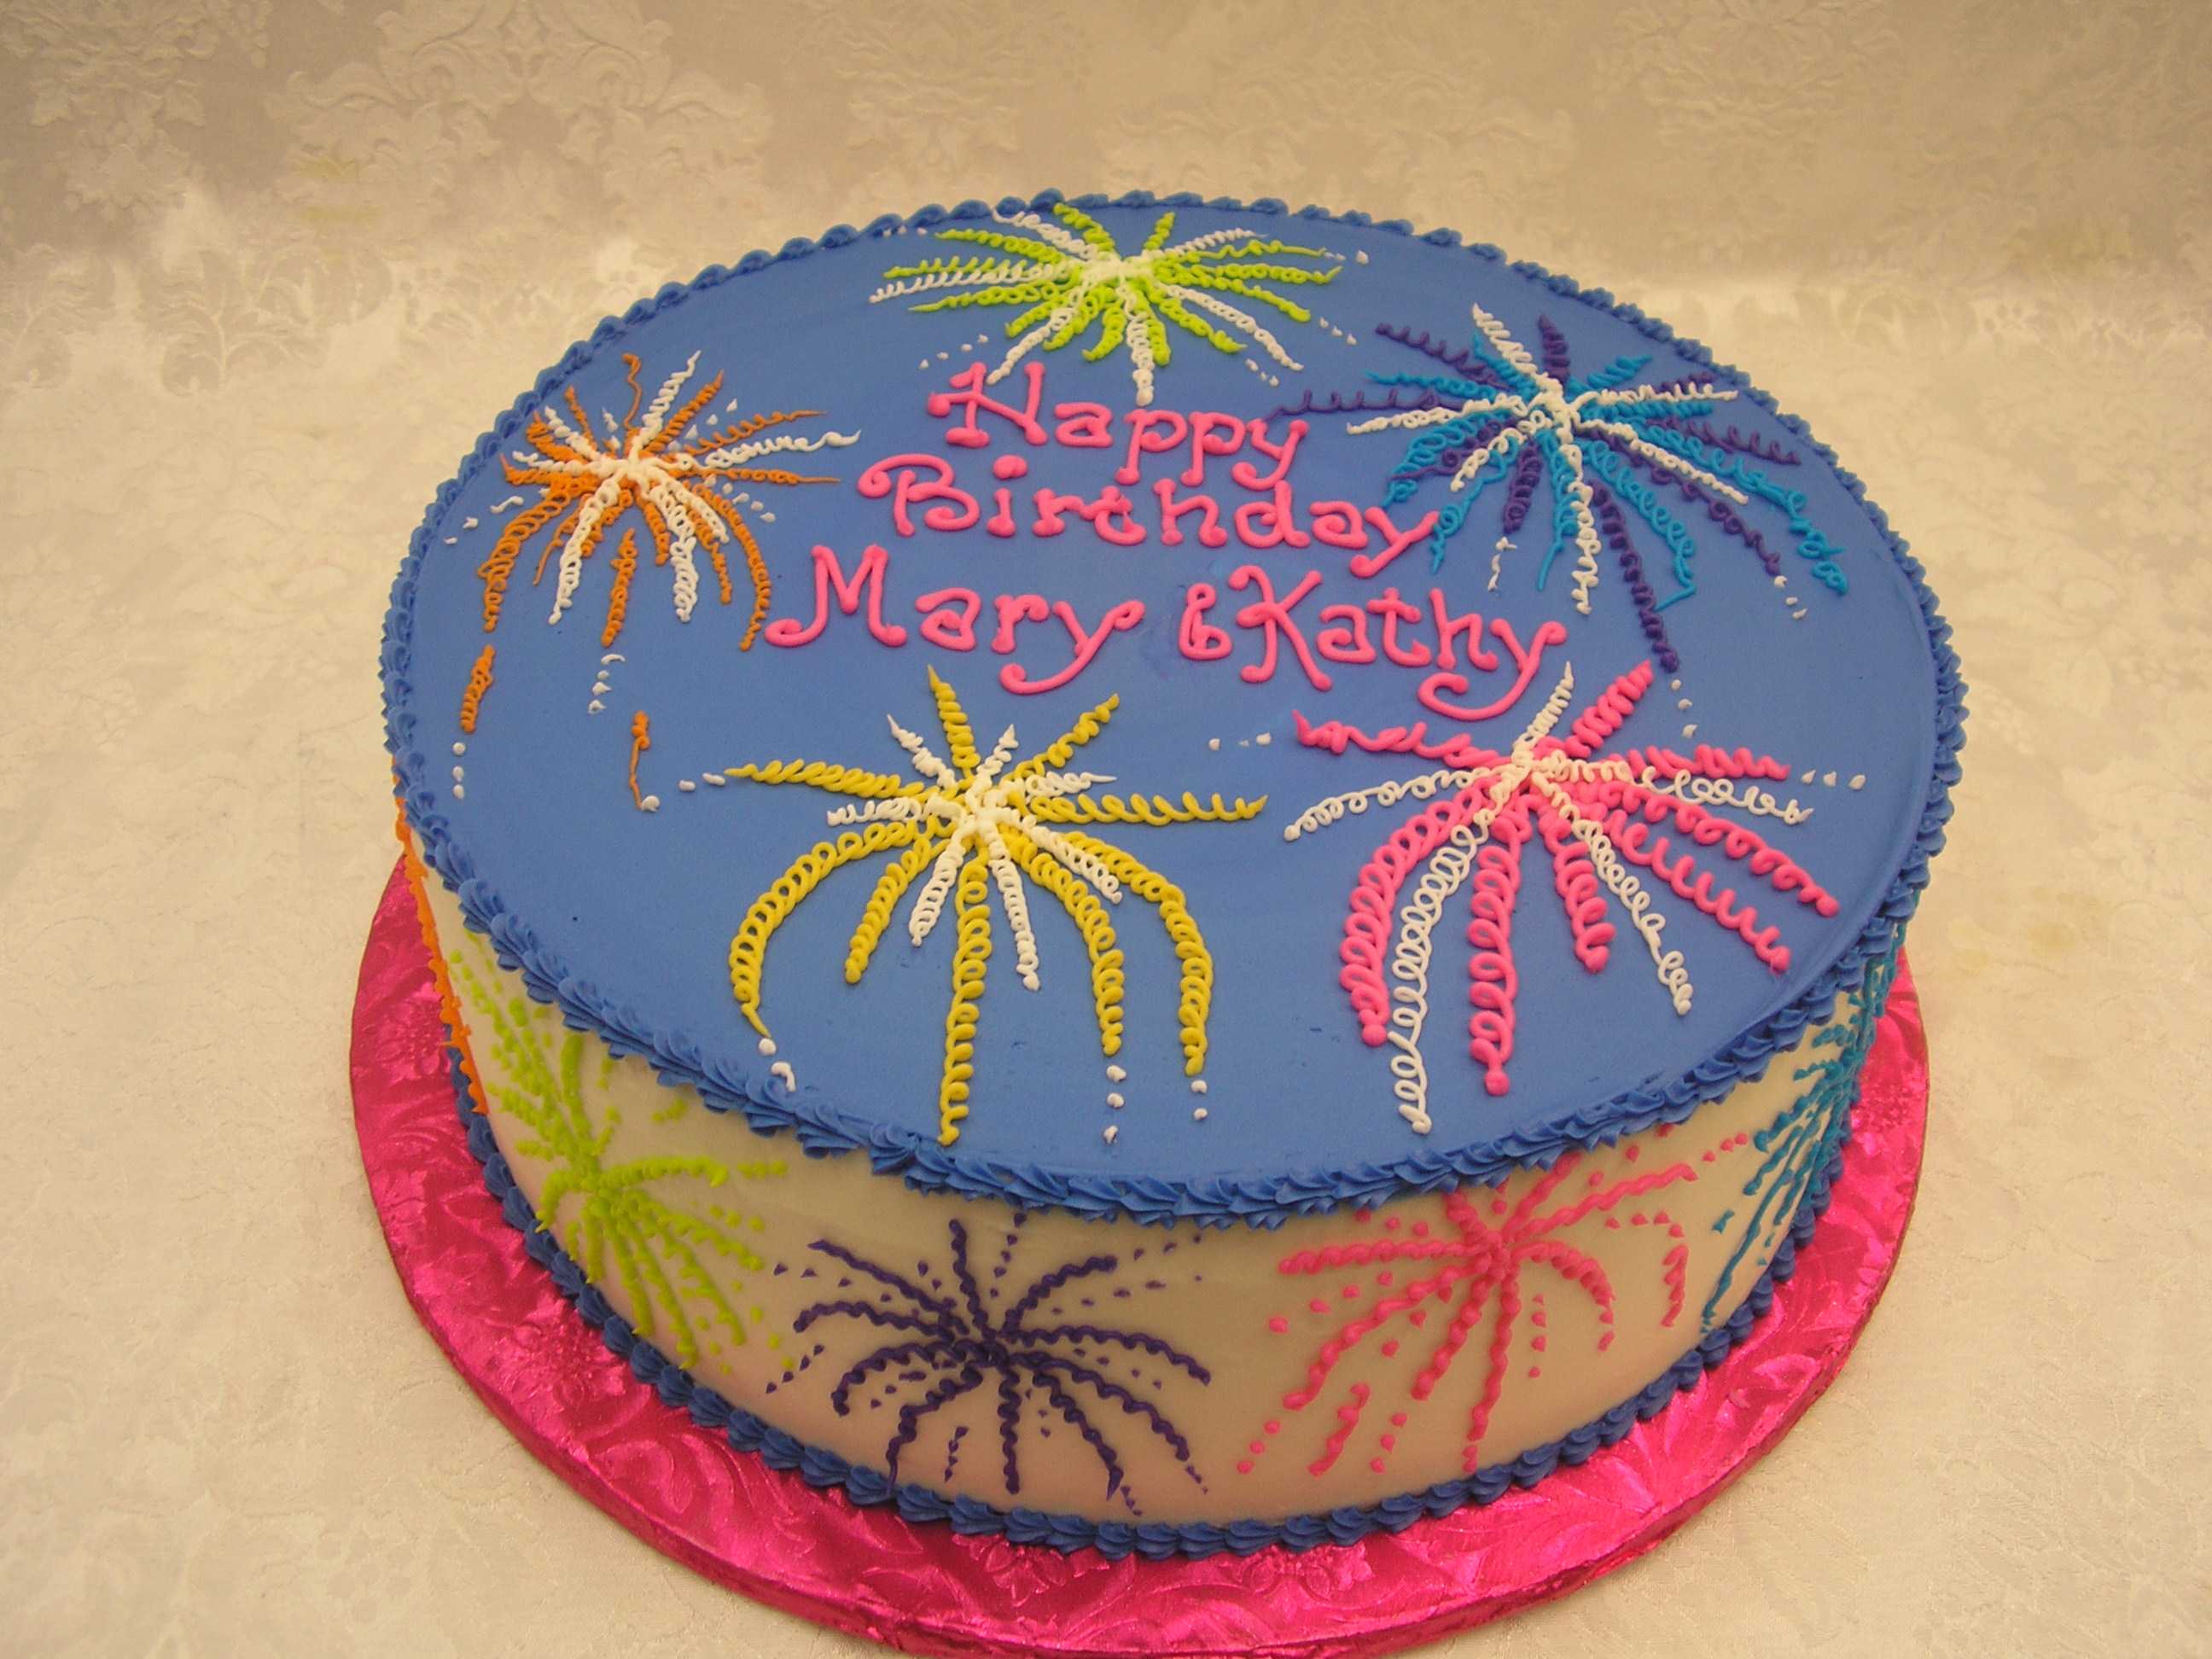 4th of July cake, fireworks cake, fireworks birthday cake